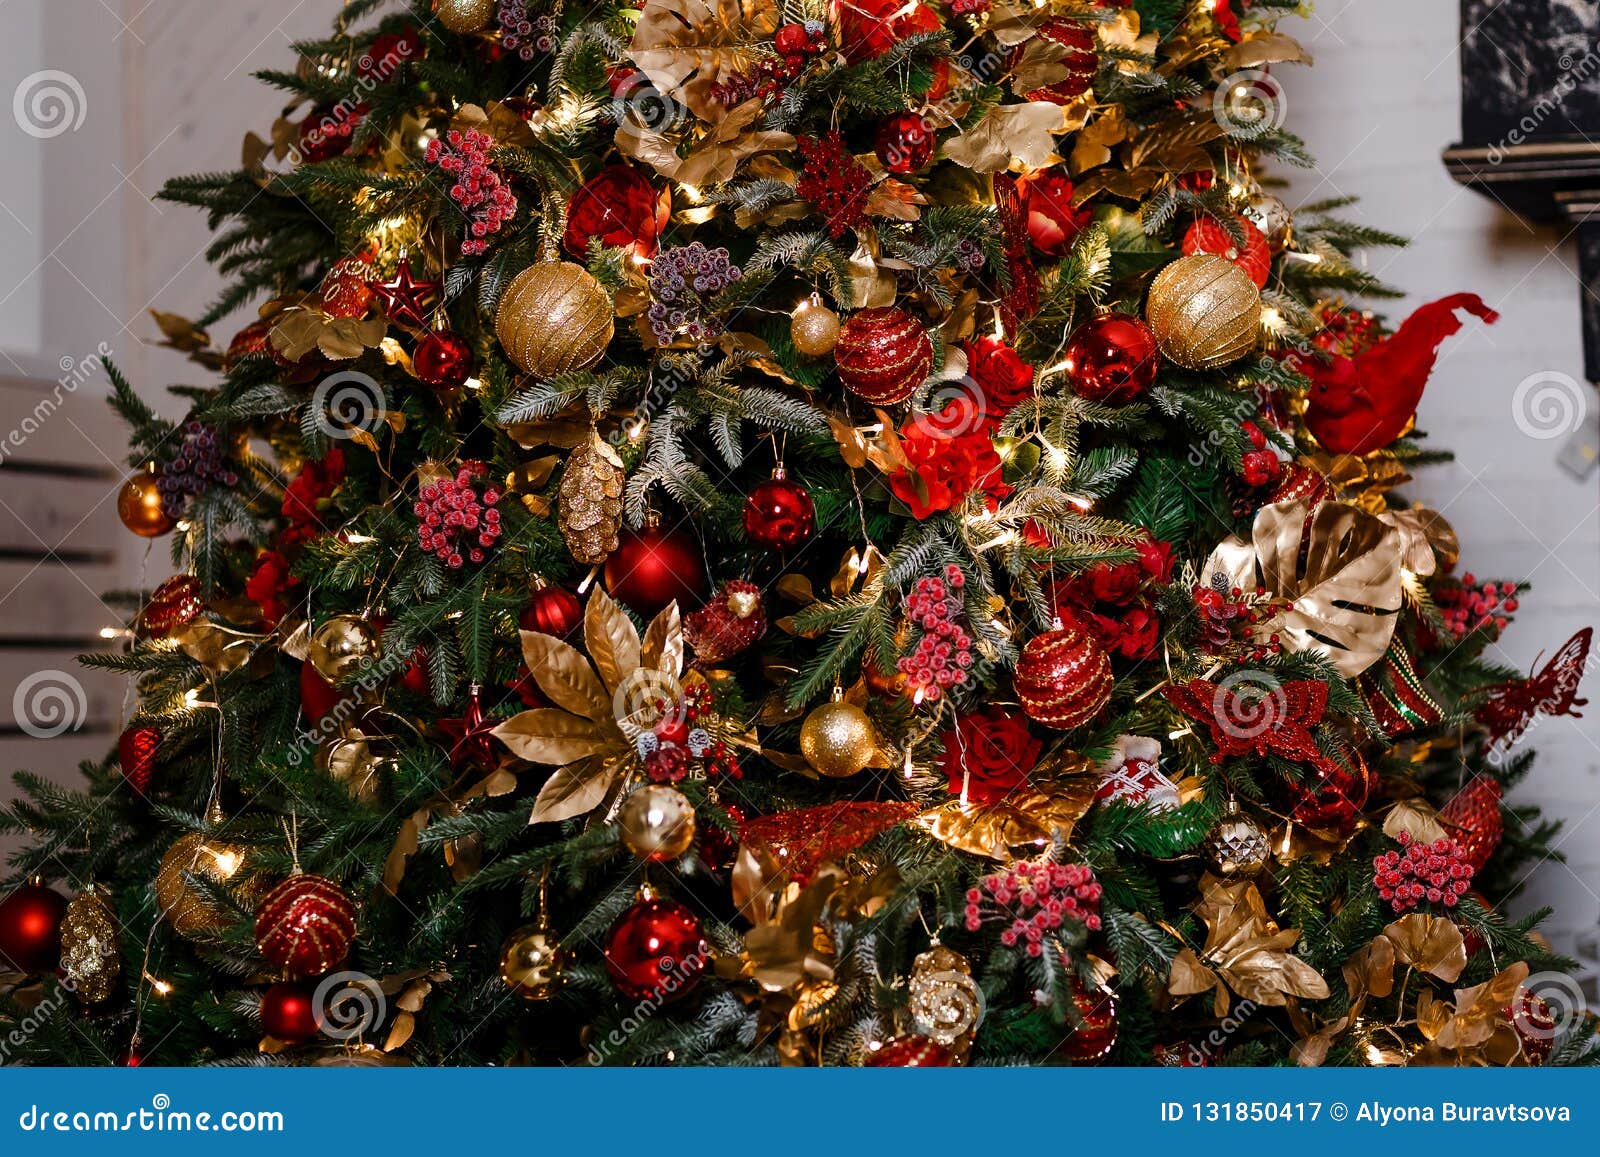 Stunningly Beautifully Decorated Christmas Tree Stock Image - Image of ...